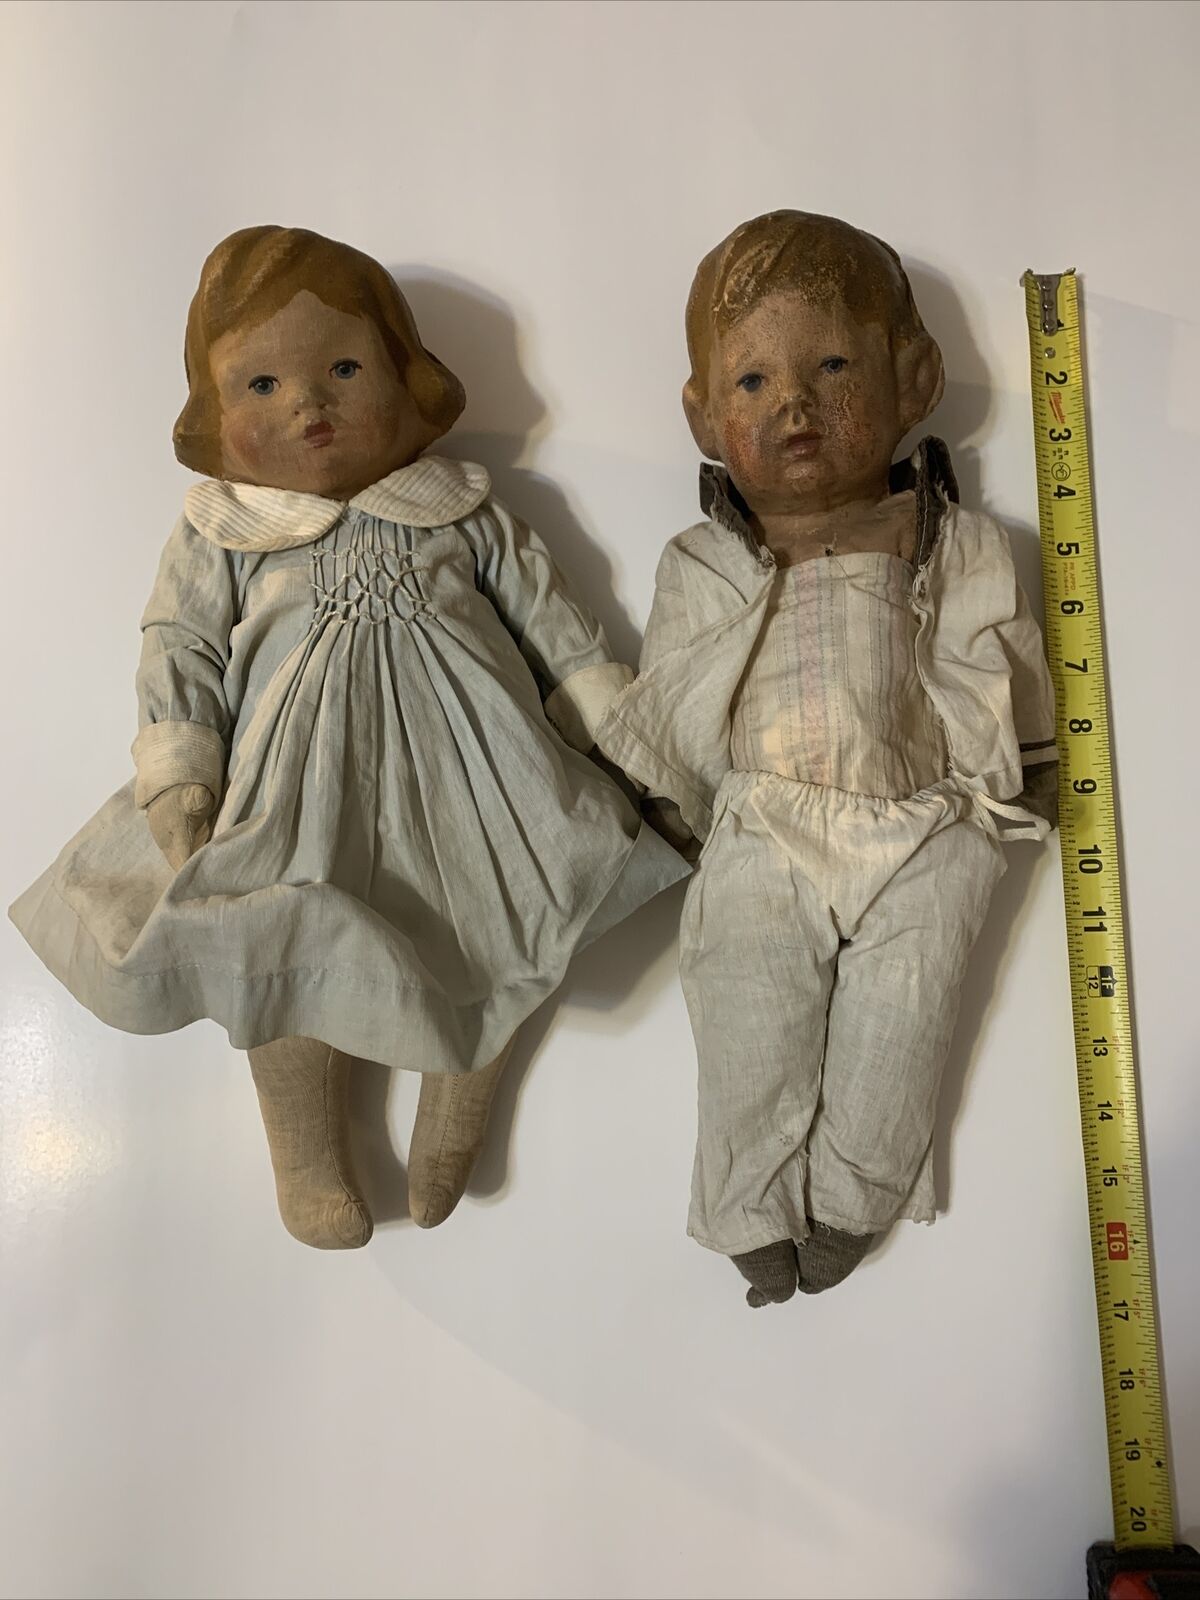 Antique Dolls Pre-1920s Cloth Dolls Old Vintage Saw Dust Doll 16”